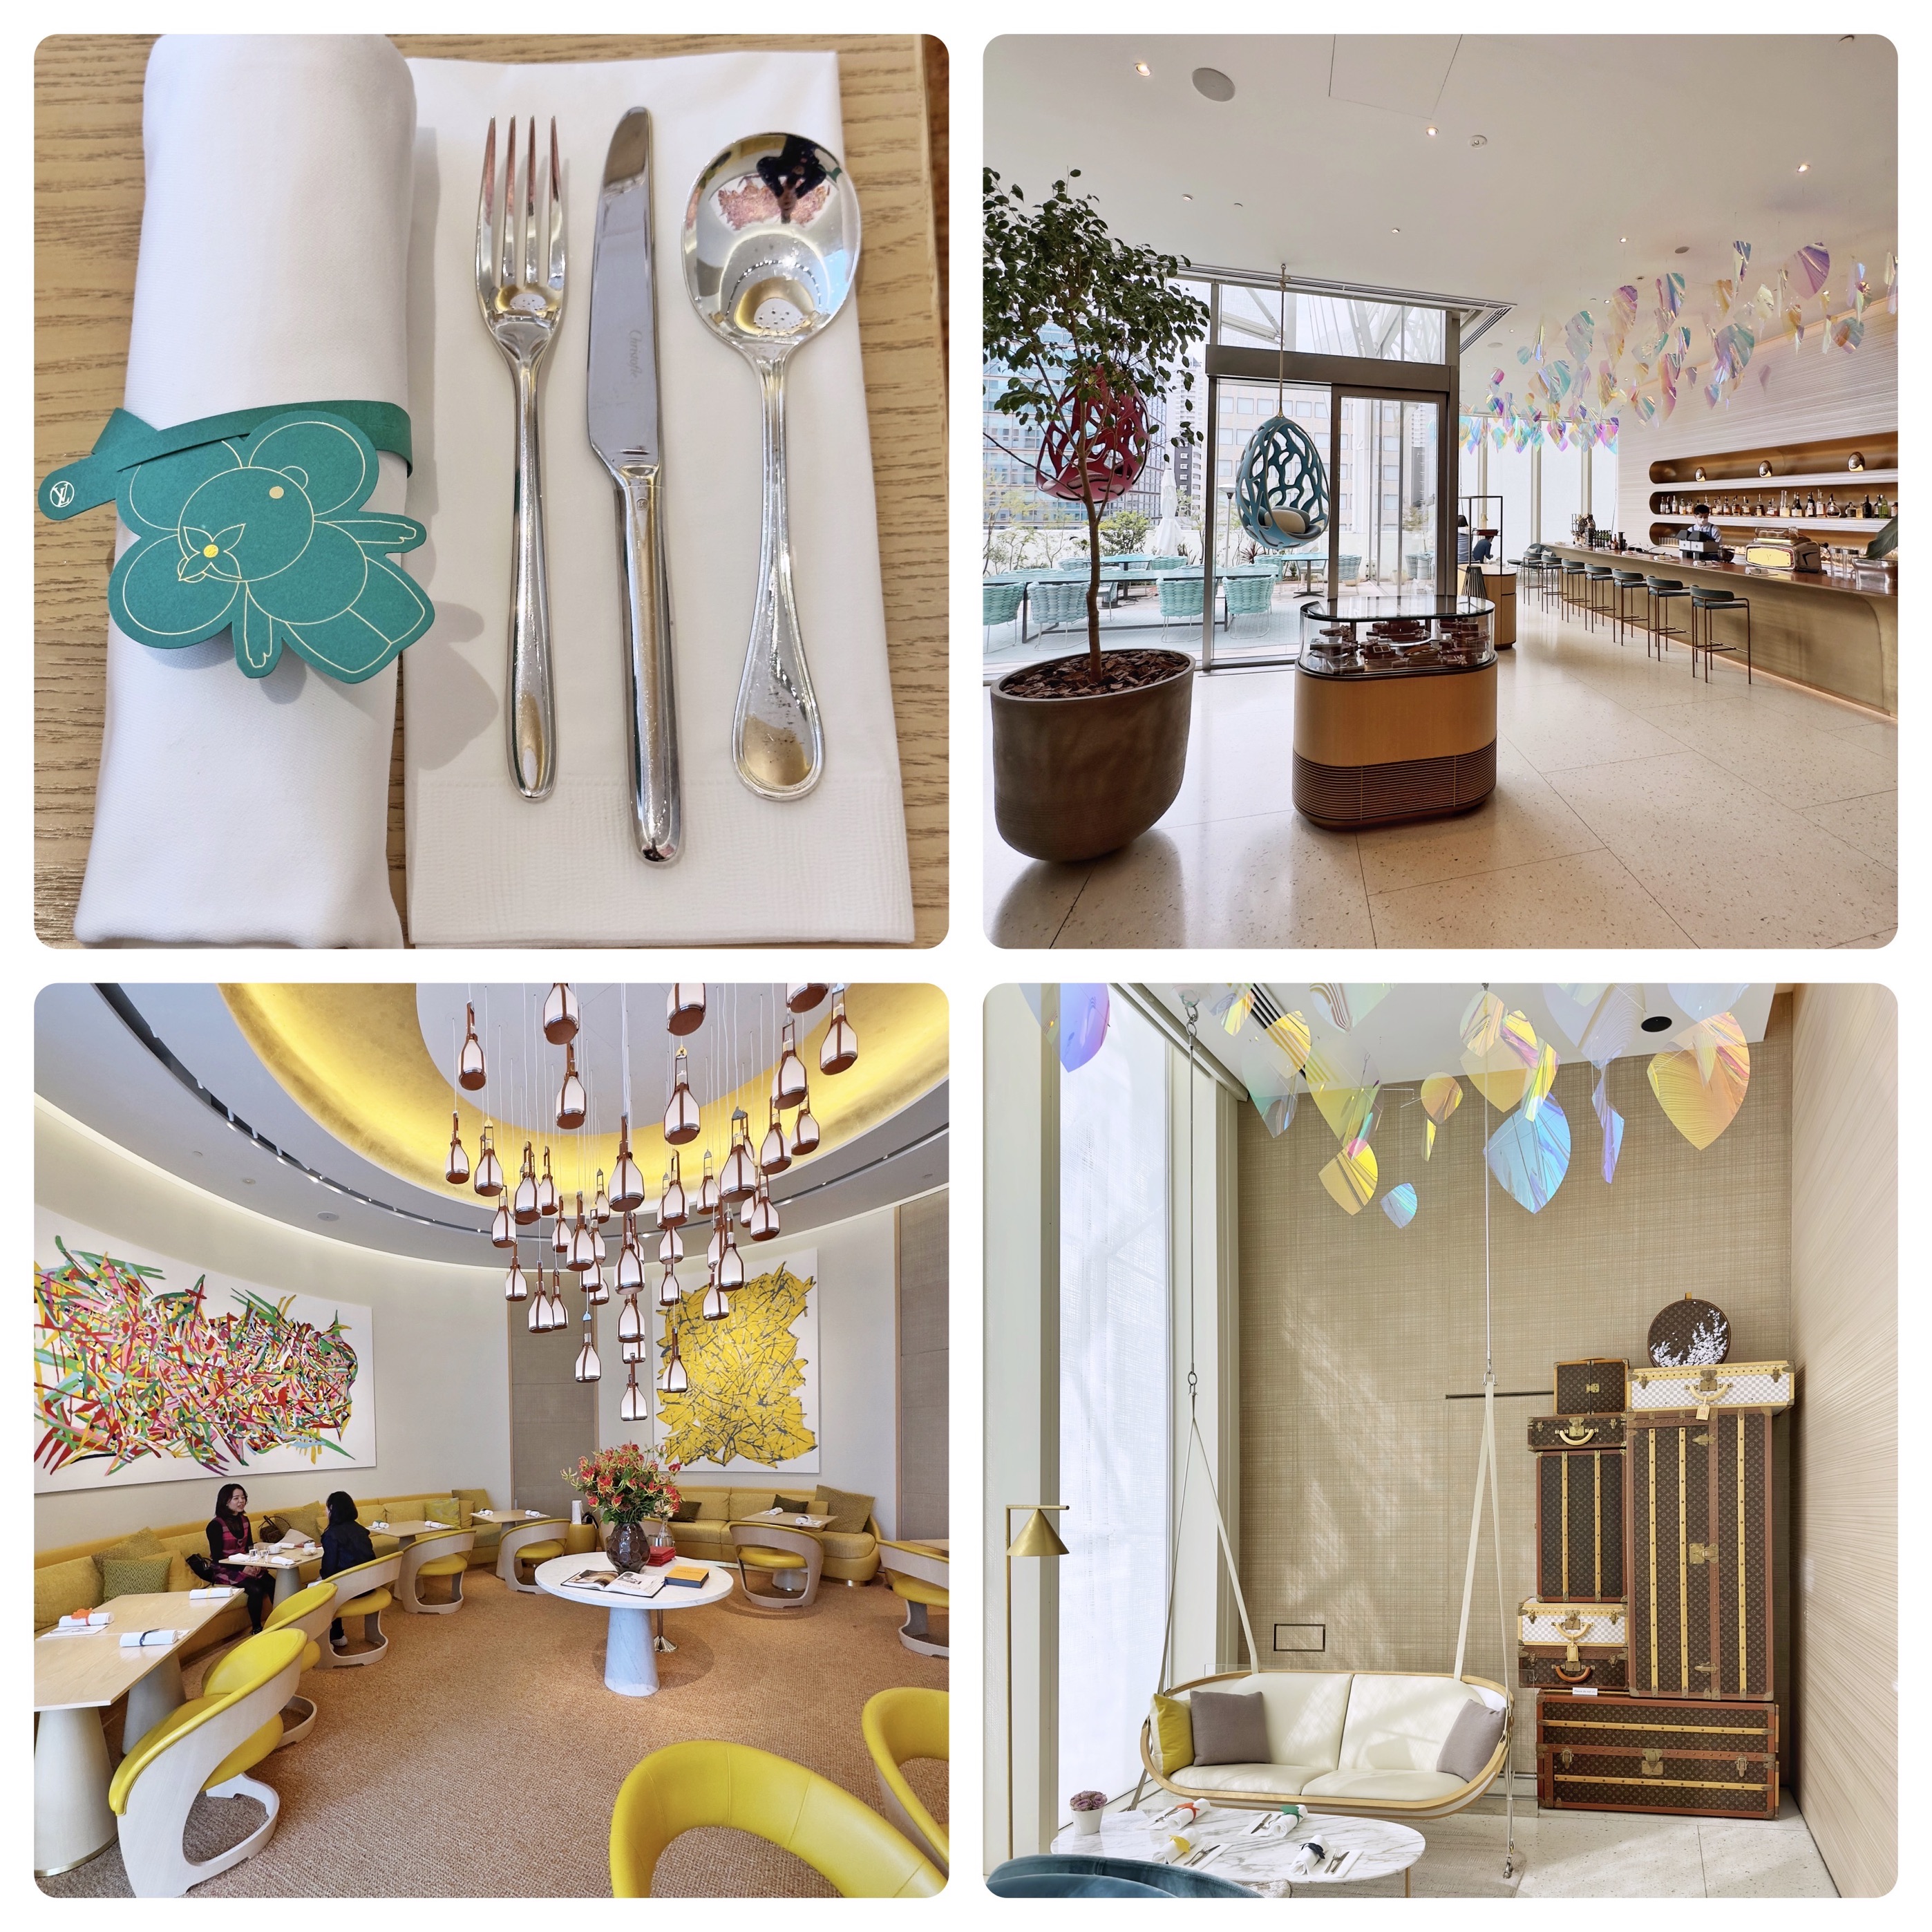 Louis Vuitton Cafe Osaka: World's First LV Cafe & Restaurant